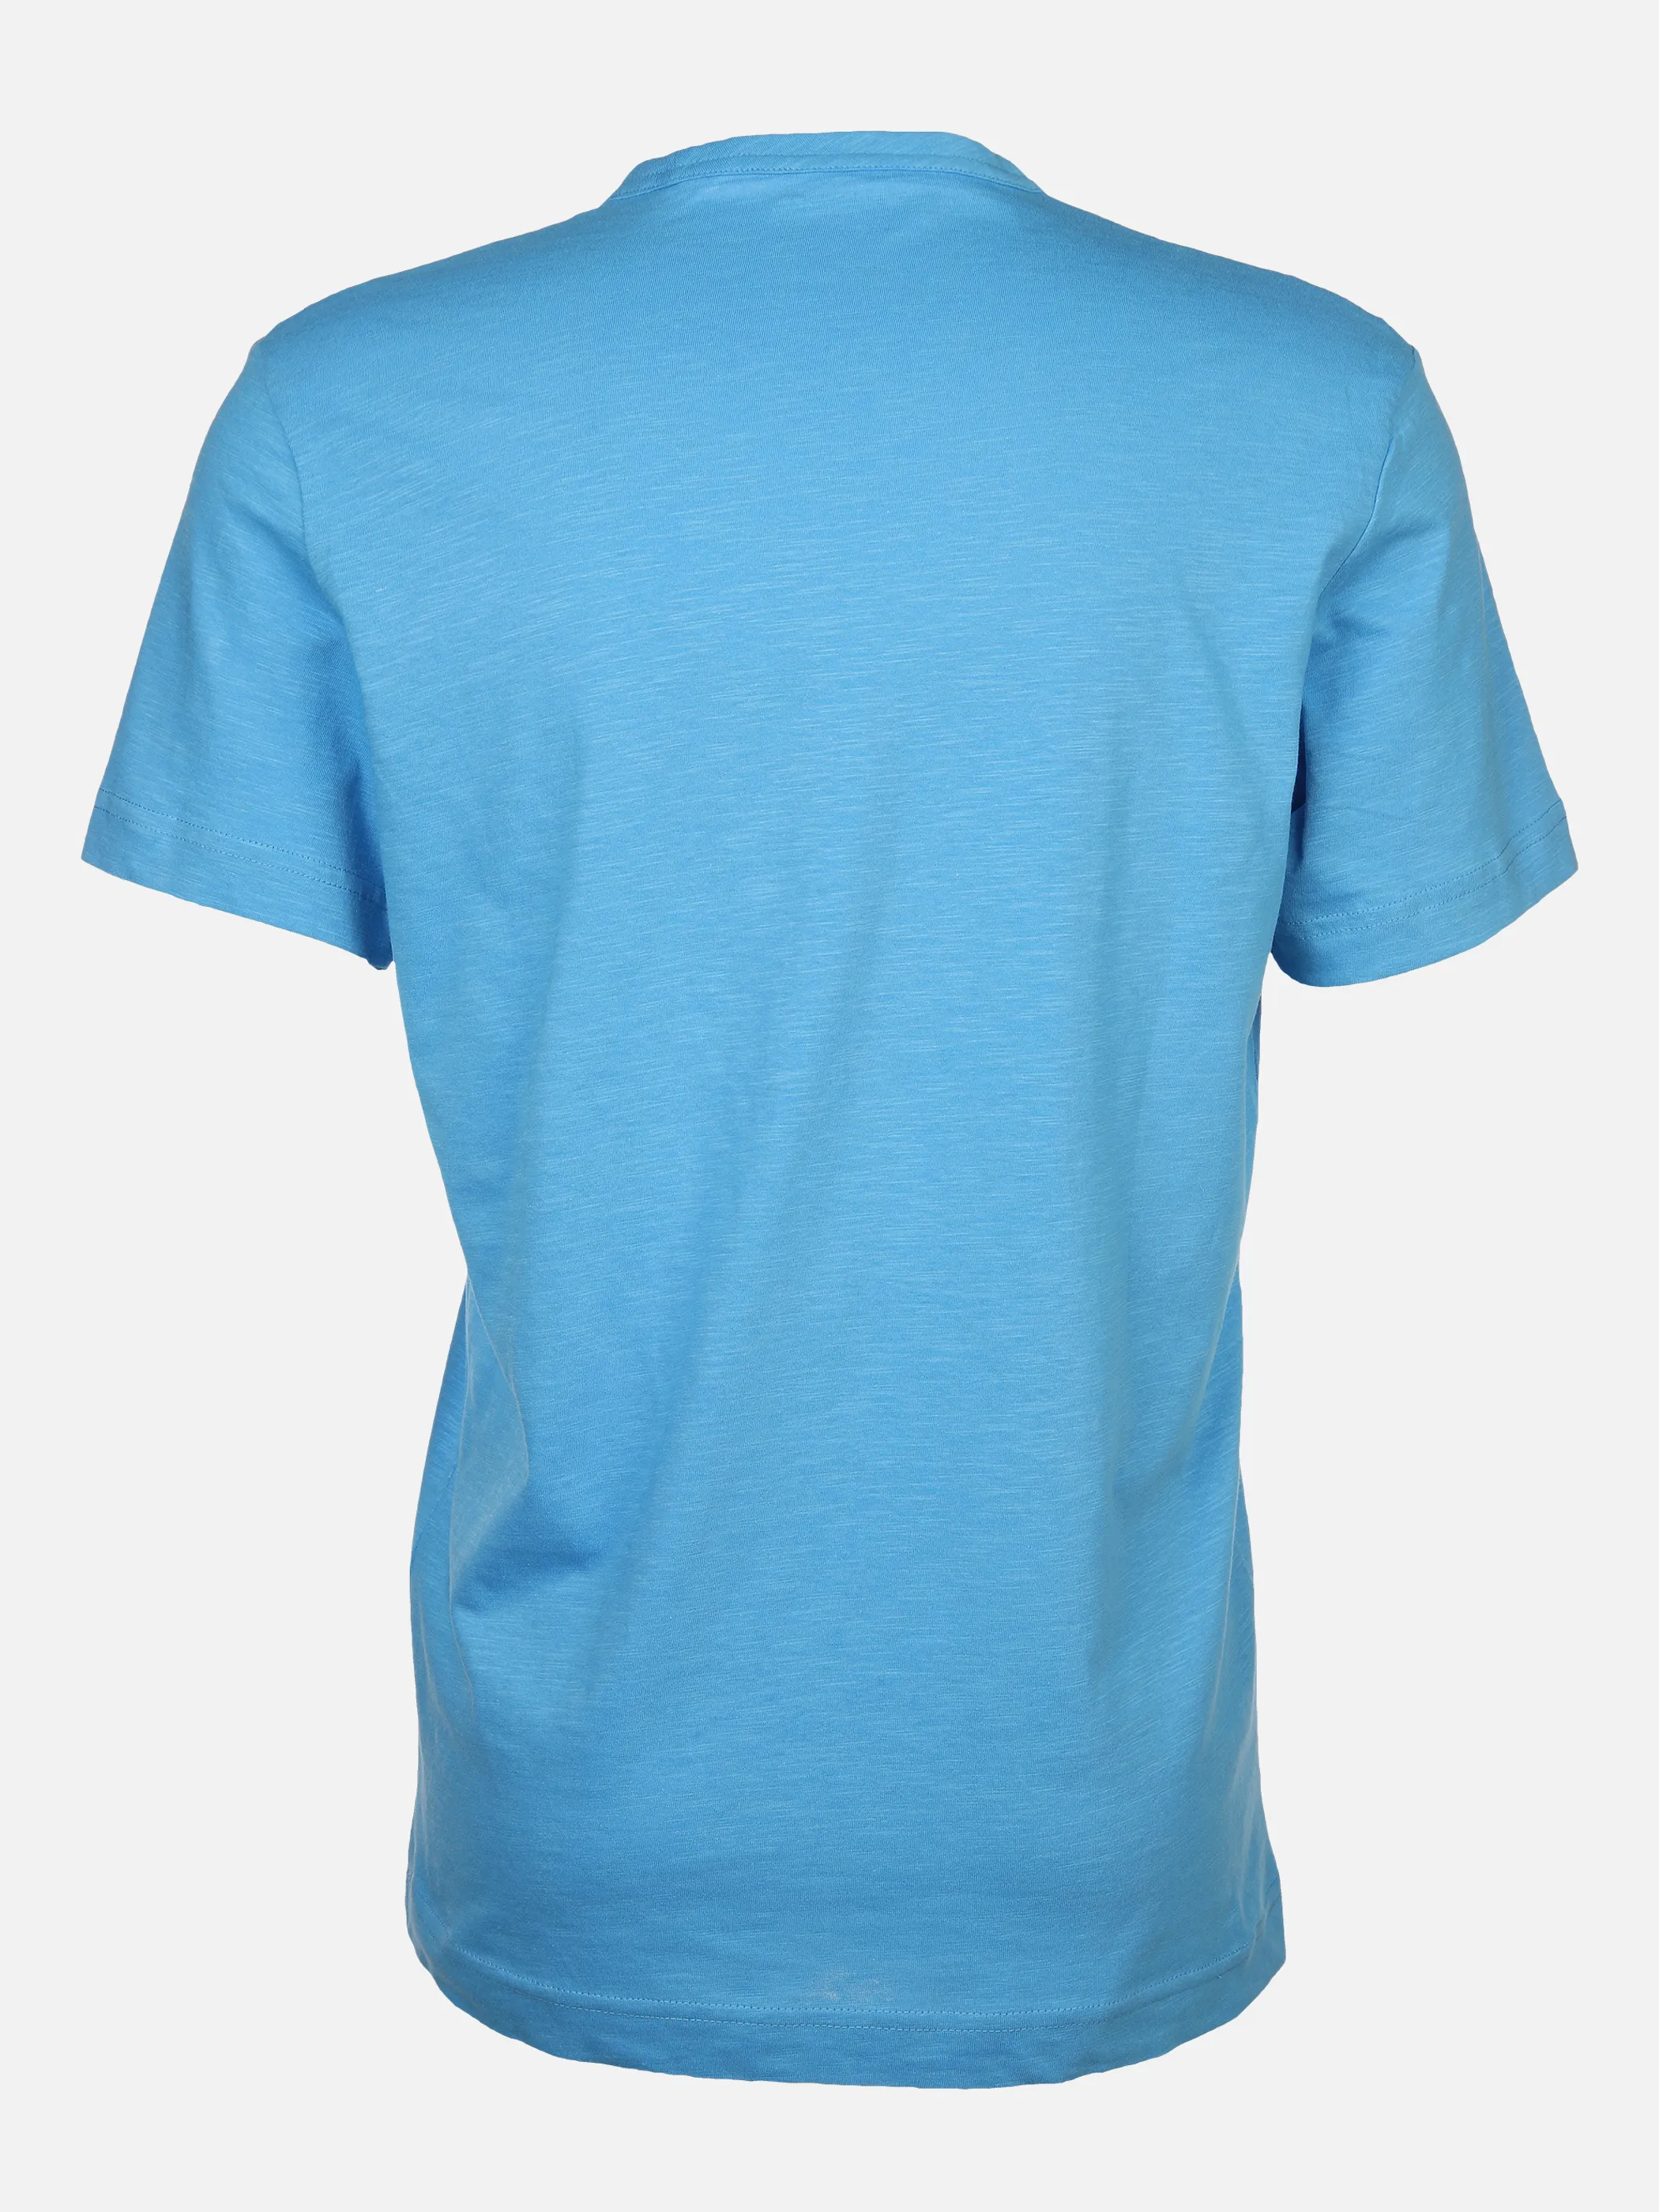 Tom Tailor 1036322 printed t-shirt Blau 880550 18395 2